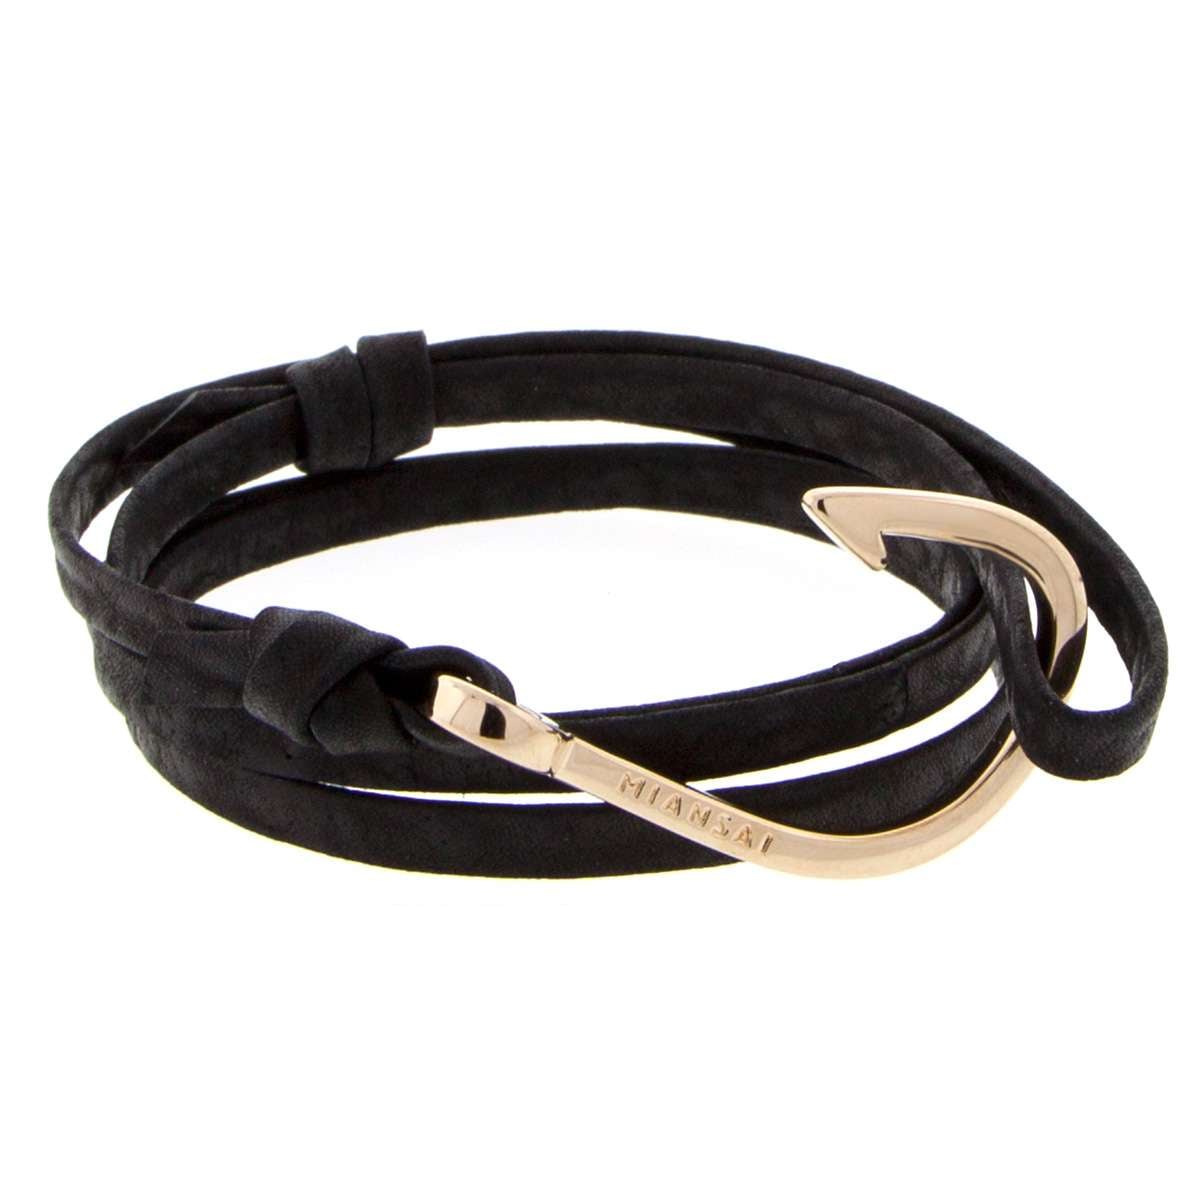 Miansai Gold Hook Bracelet Review